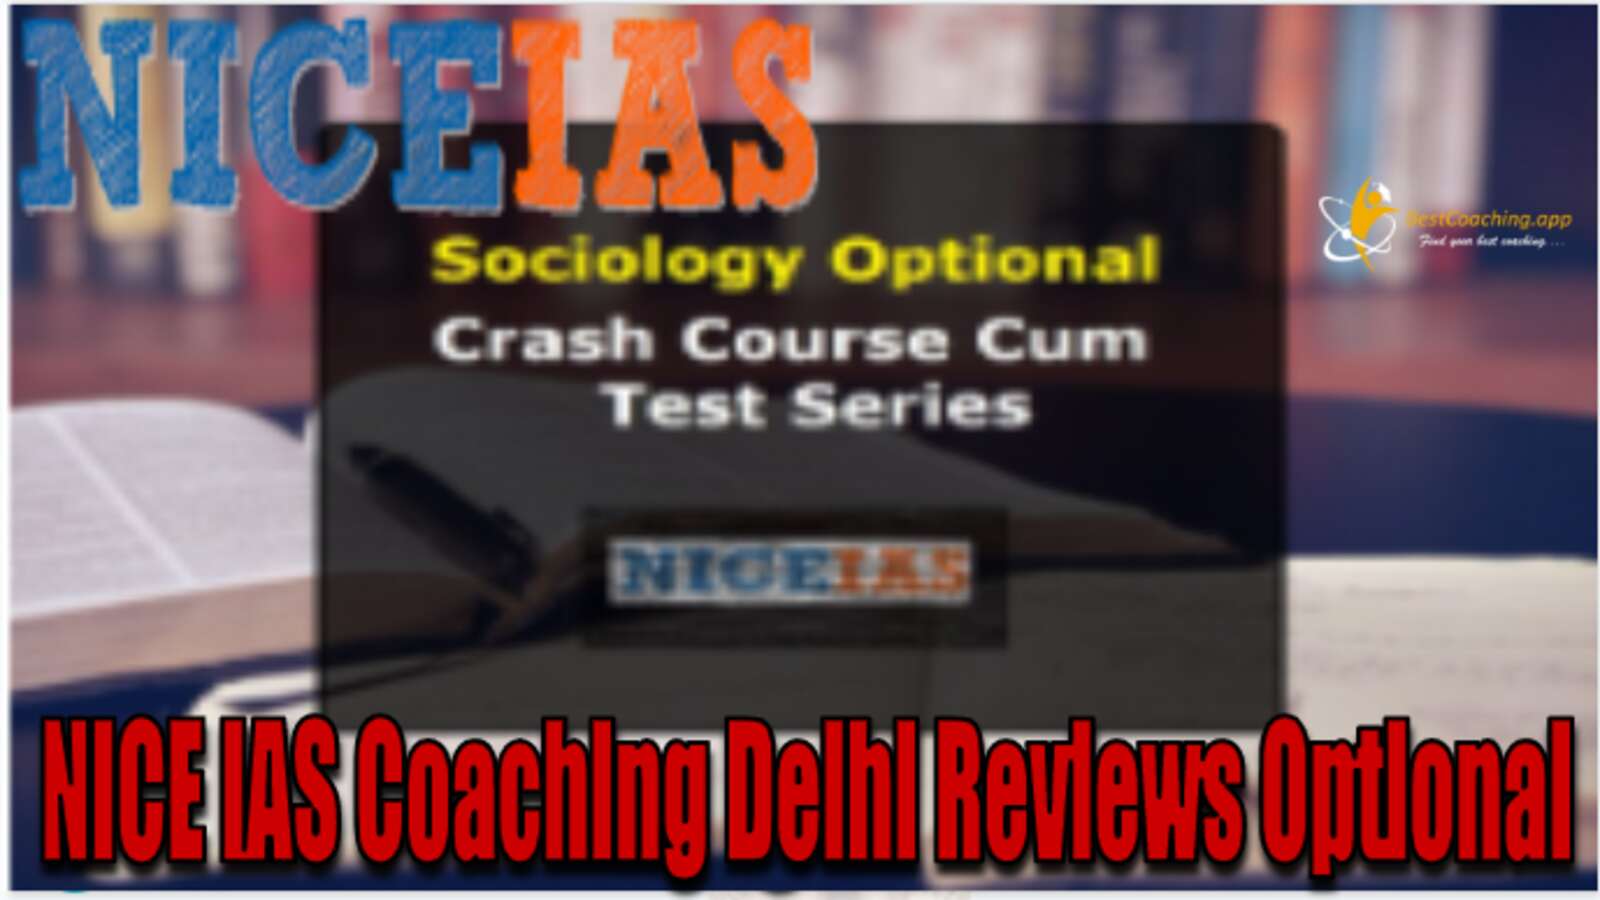 NICE IAS Coaching Delhi Review Optional